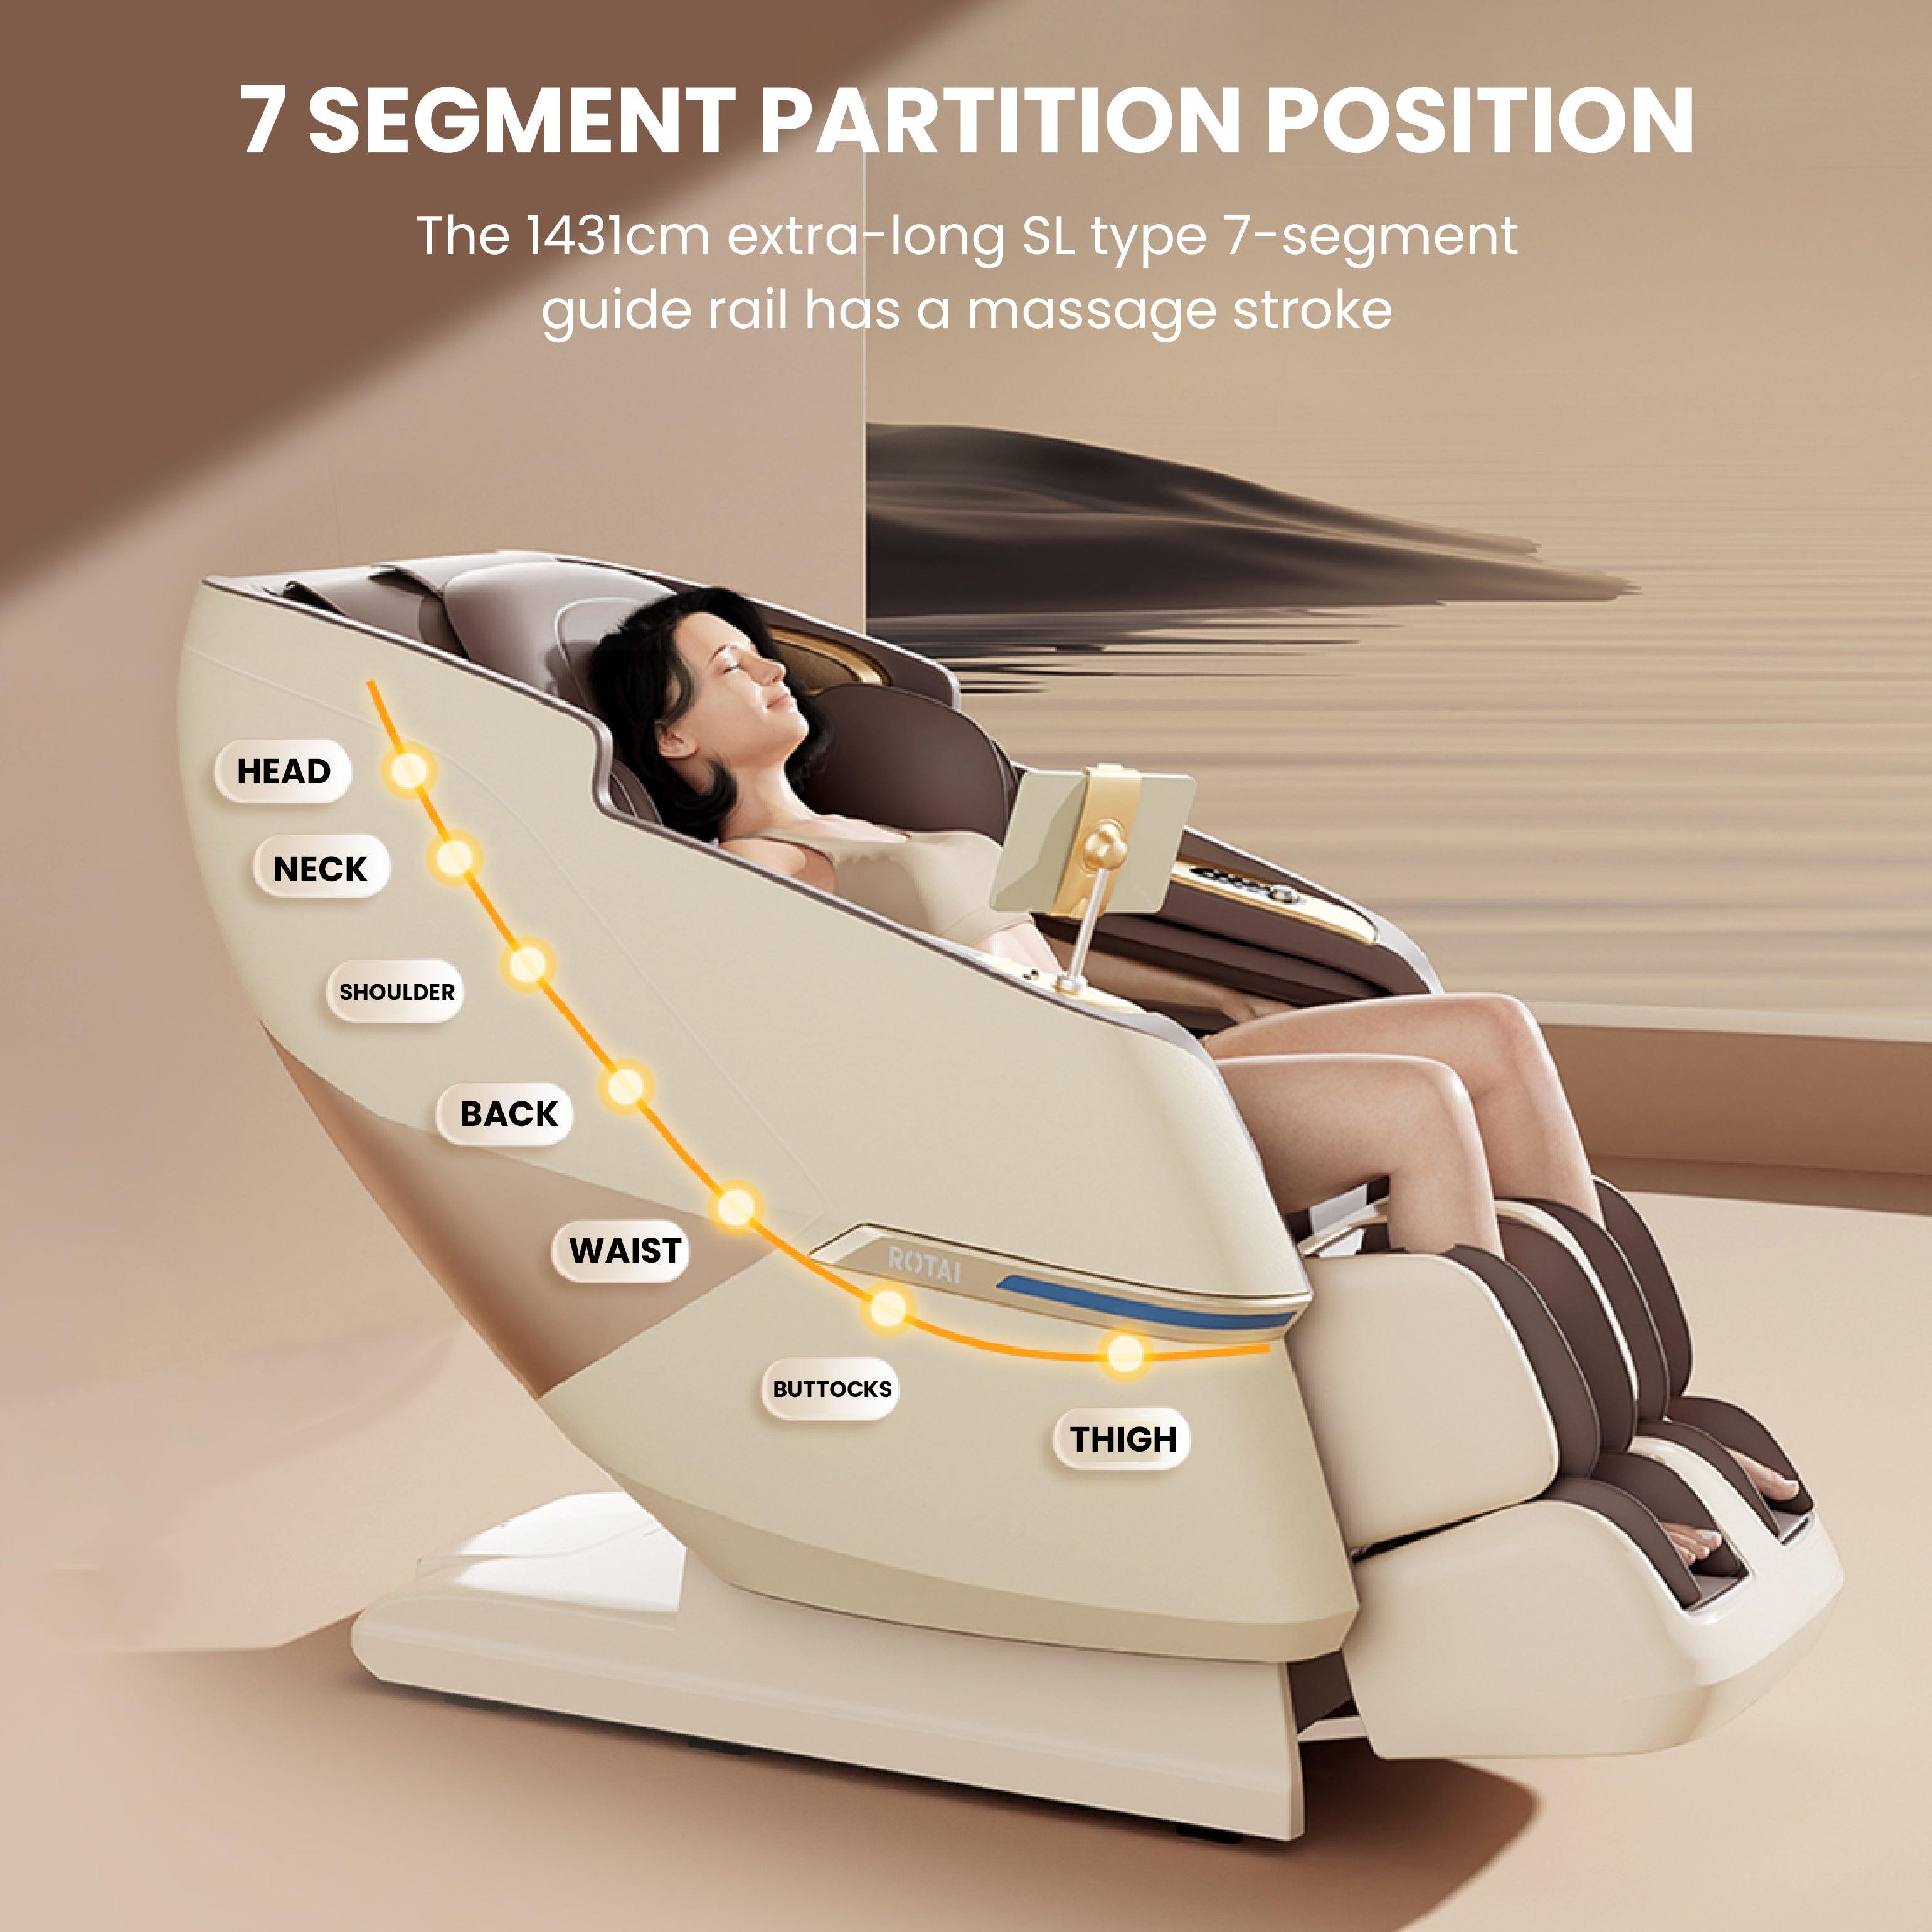 Royal Majestic Pro Massage Chair demonstrating 7-segment partition position for head, neck, shoulder, back, waist, buttocks, thigh massage.